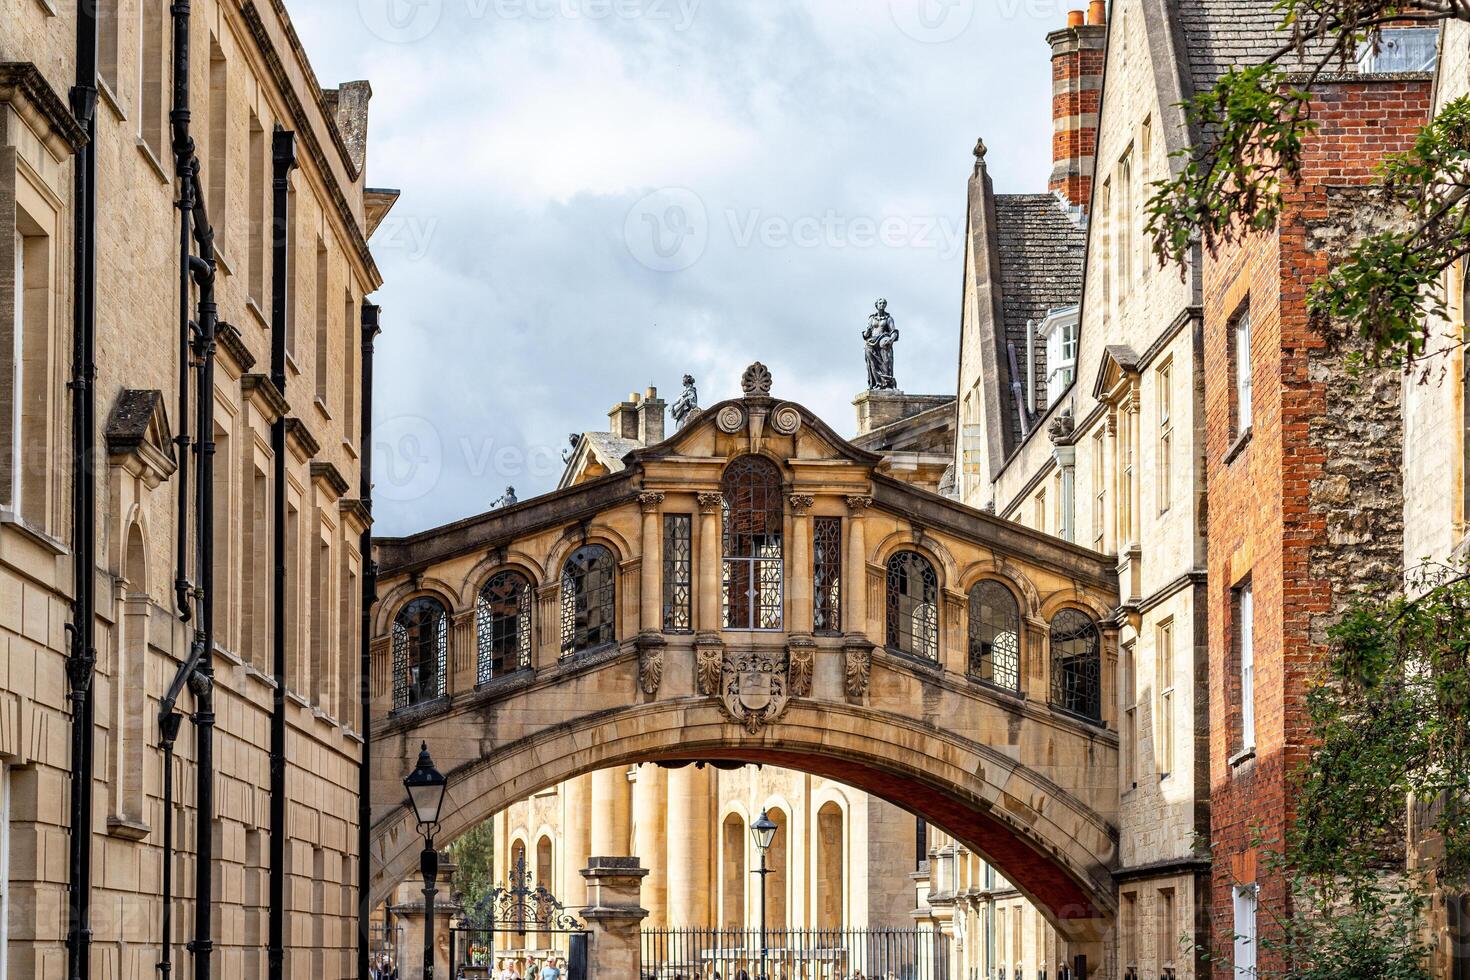 historisch steen brug Verbinden twee oud gebouwen tegen een bewolkt lucht in Oxford, Engeland. foto